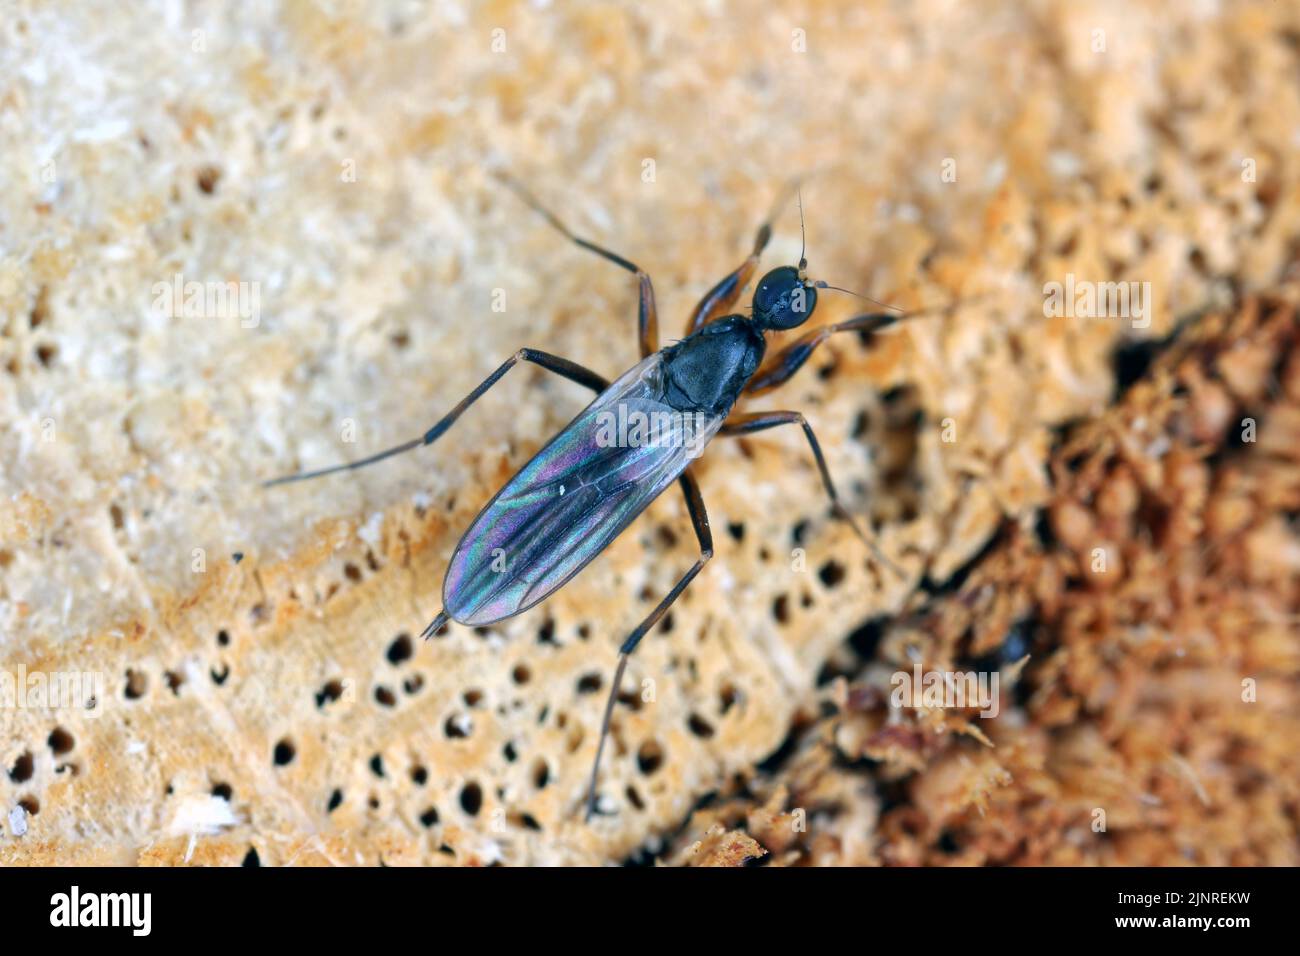 A predatory fly sitting on wood. Stock Photo